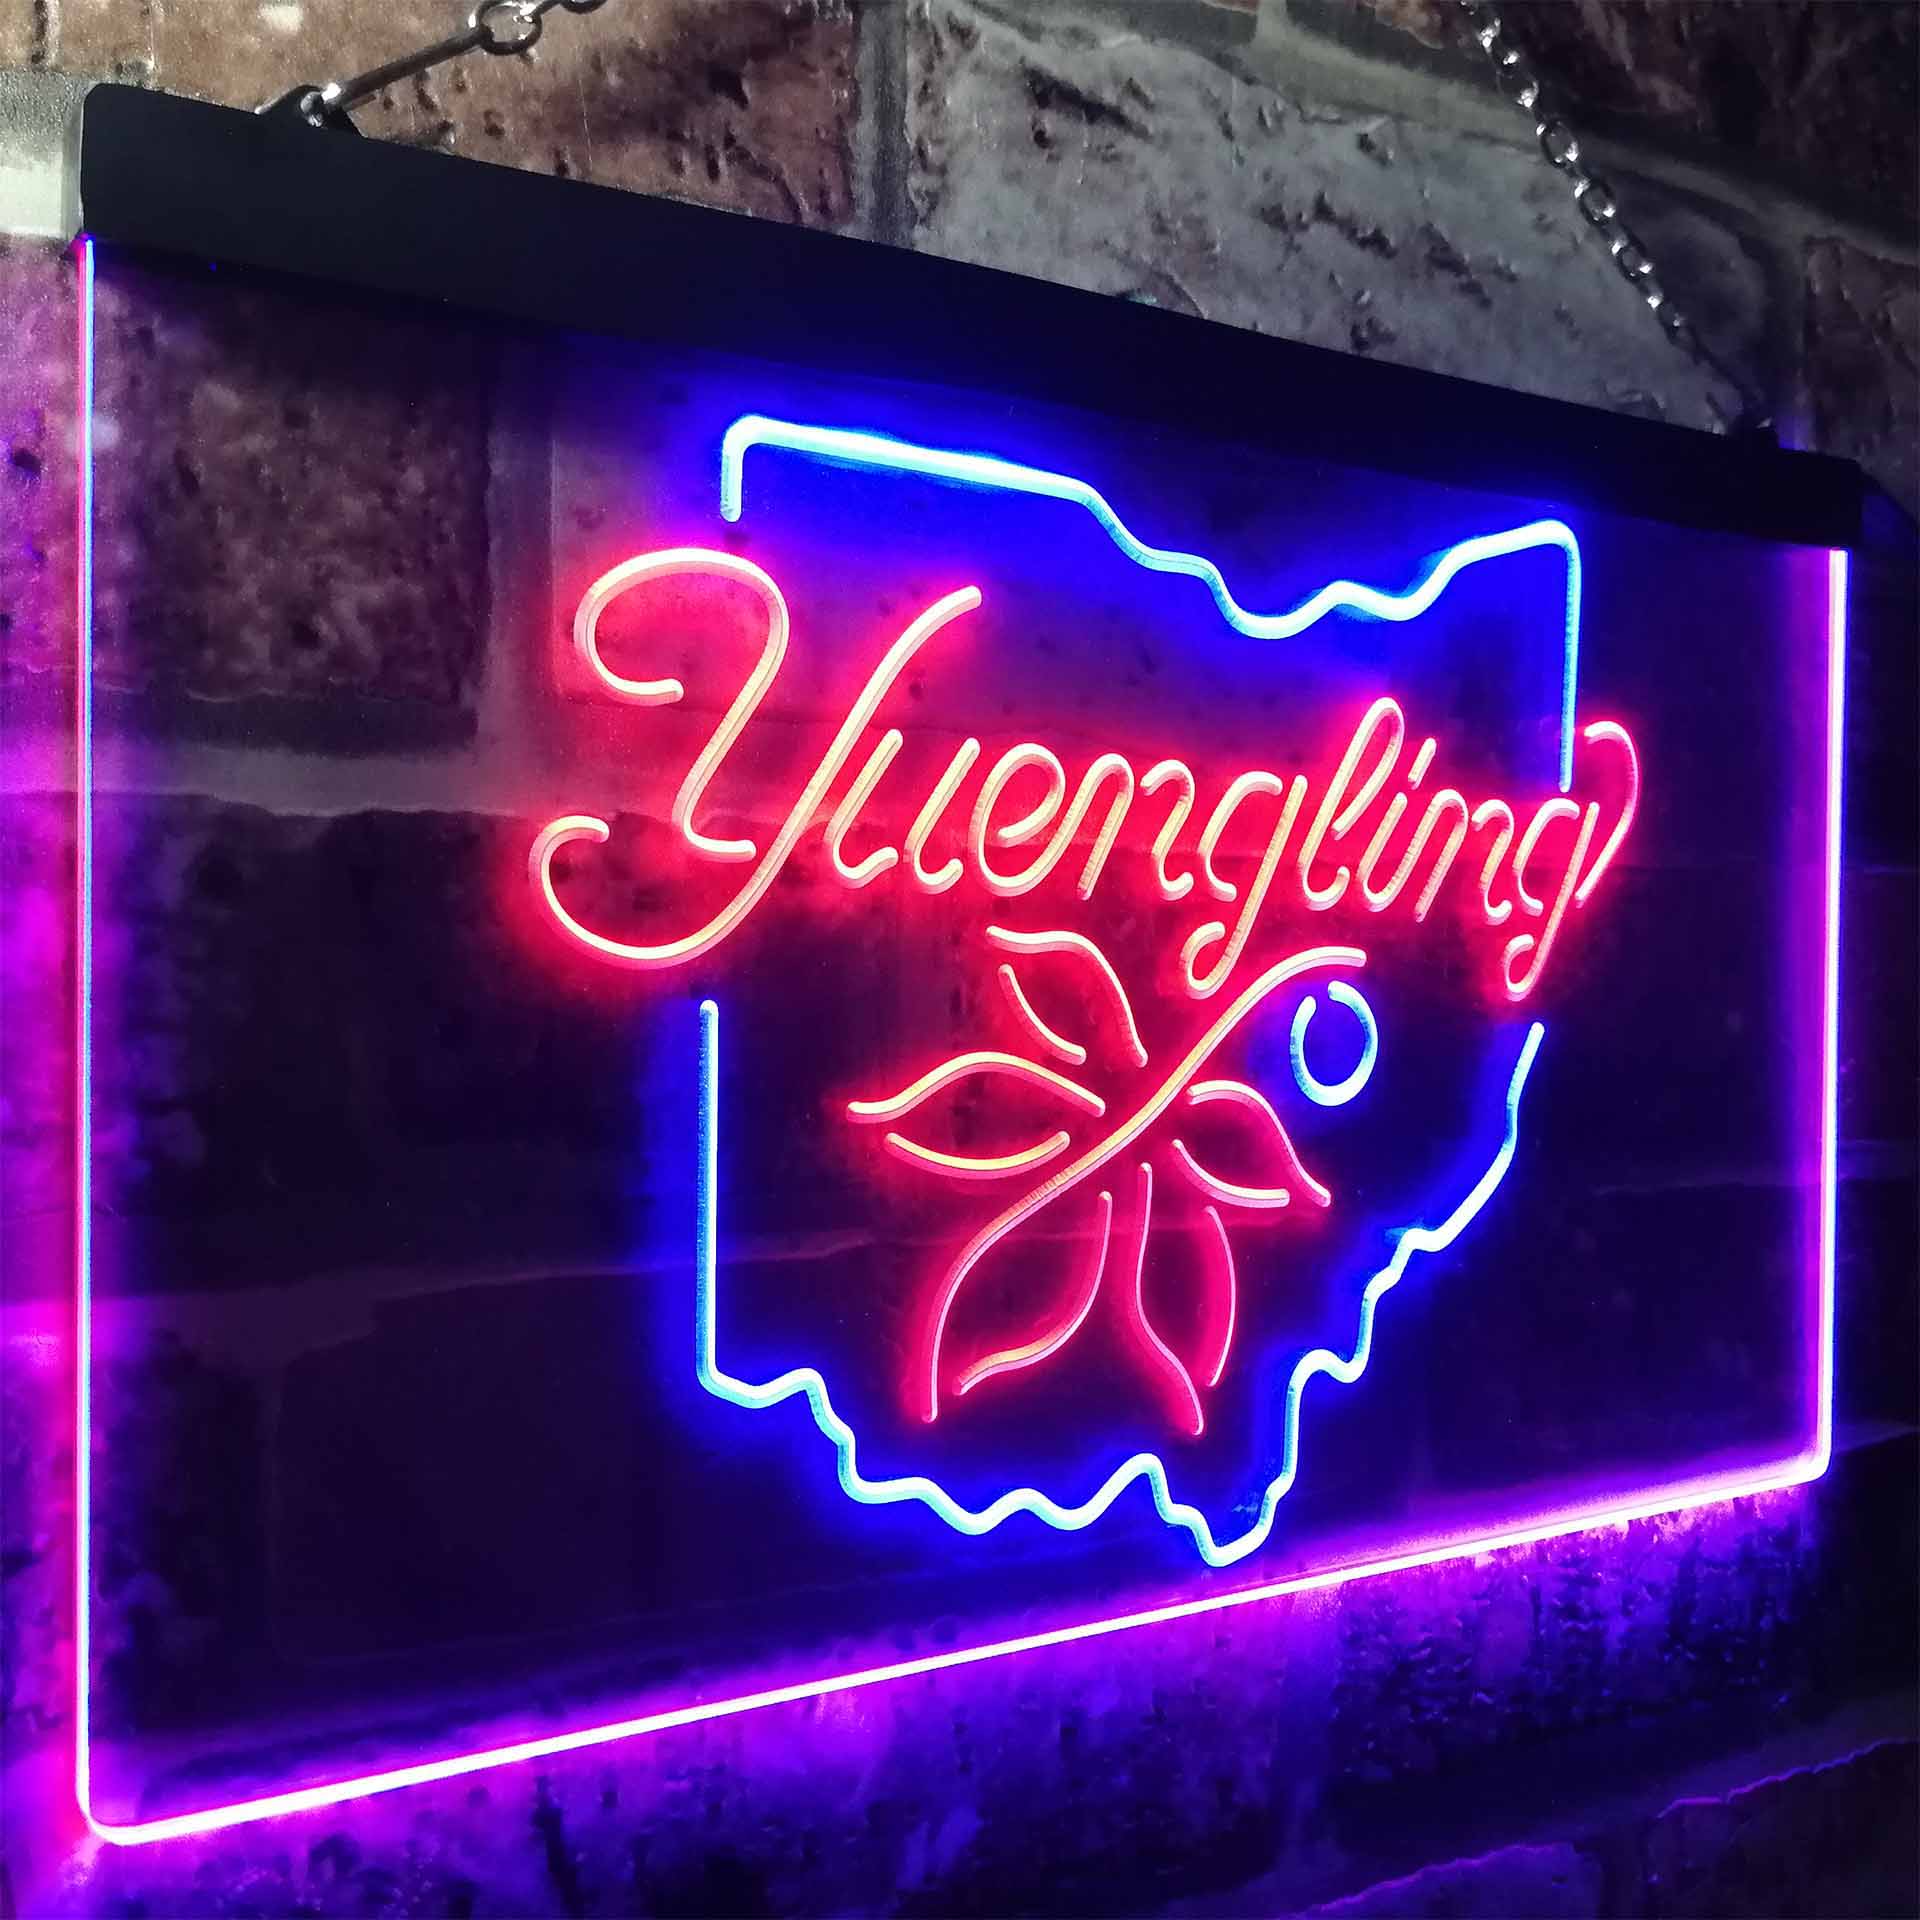 Yuengling Ohio State Buckeye Larger Beer Neon LED Sign